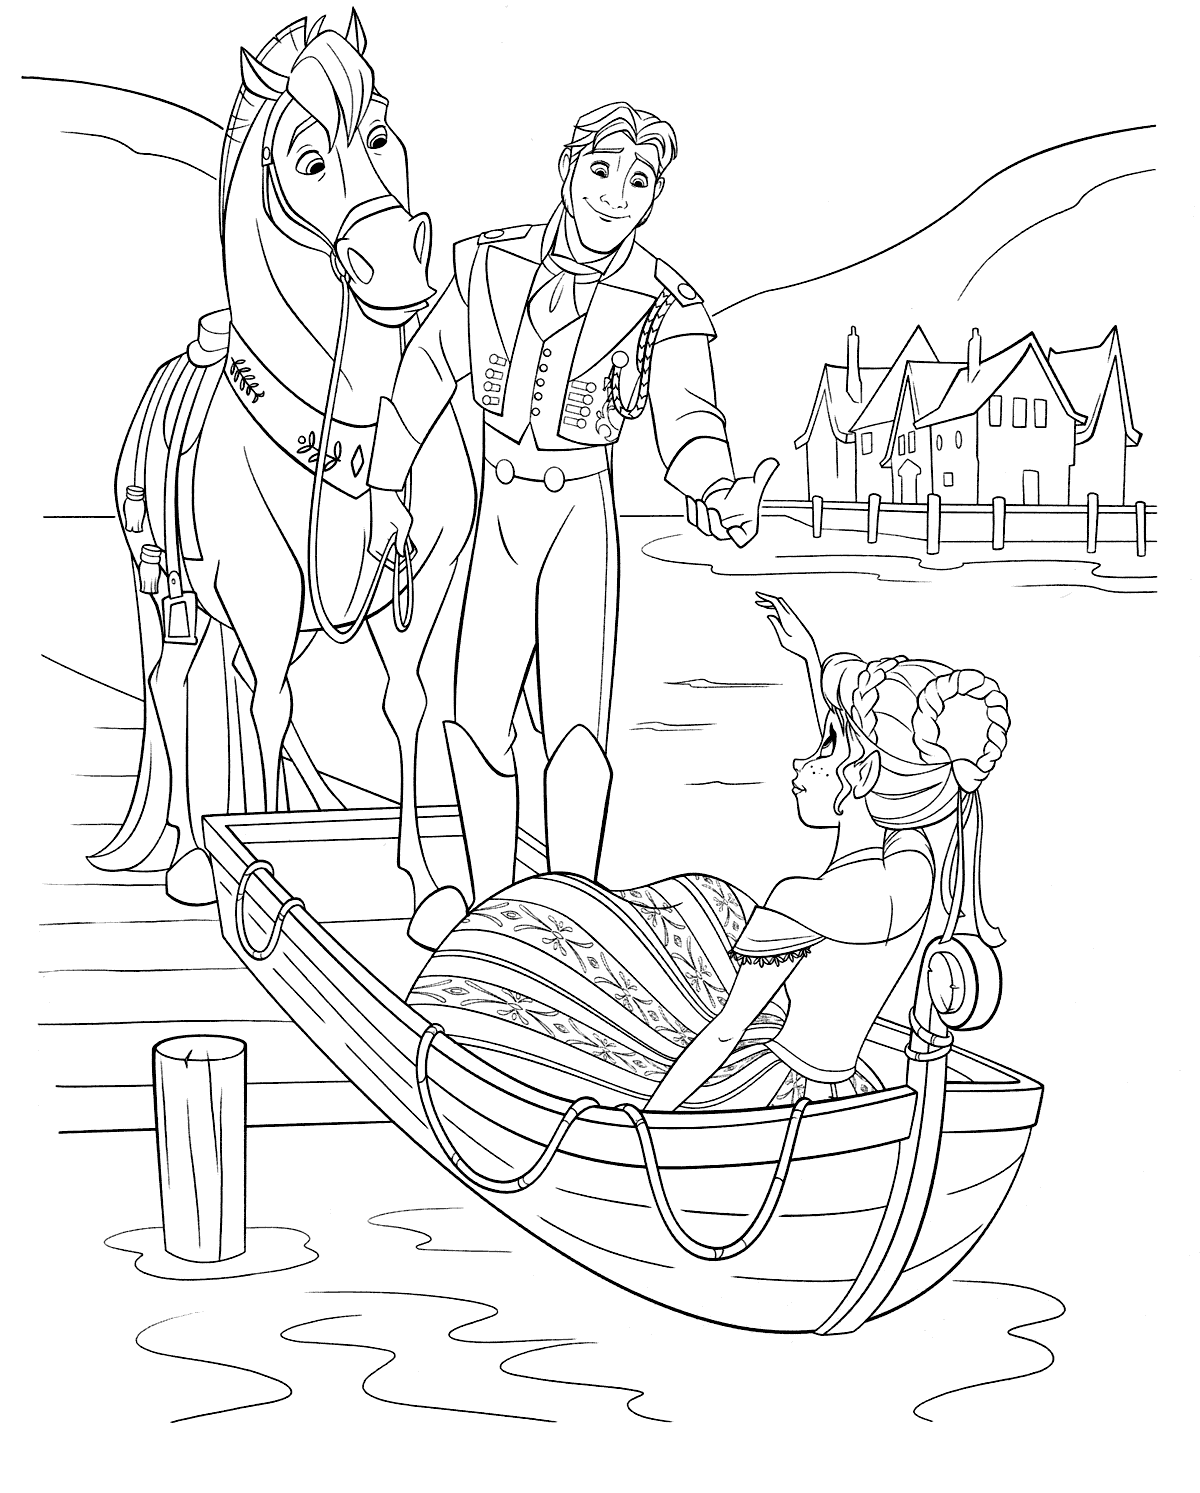 Ганс с лошадью и Анна в лодке